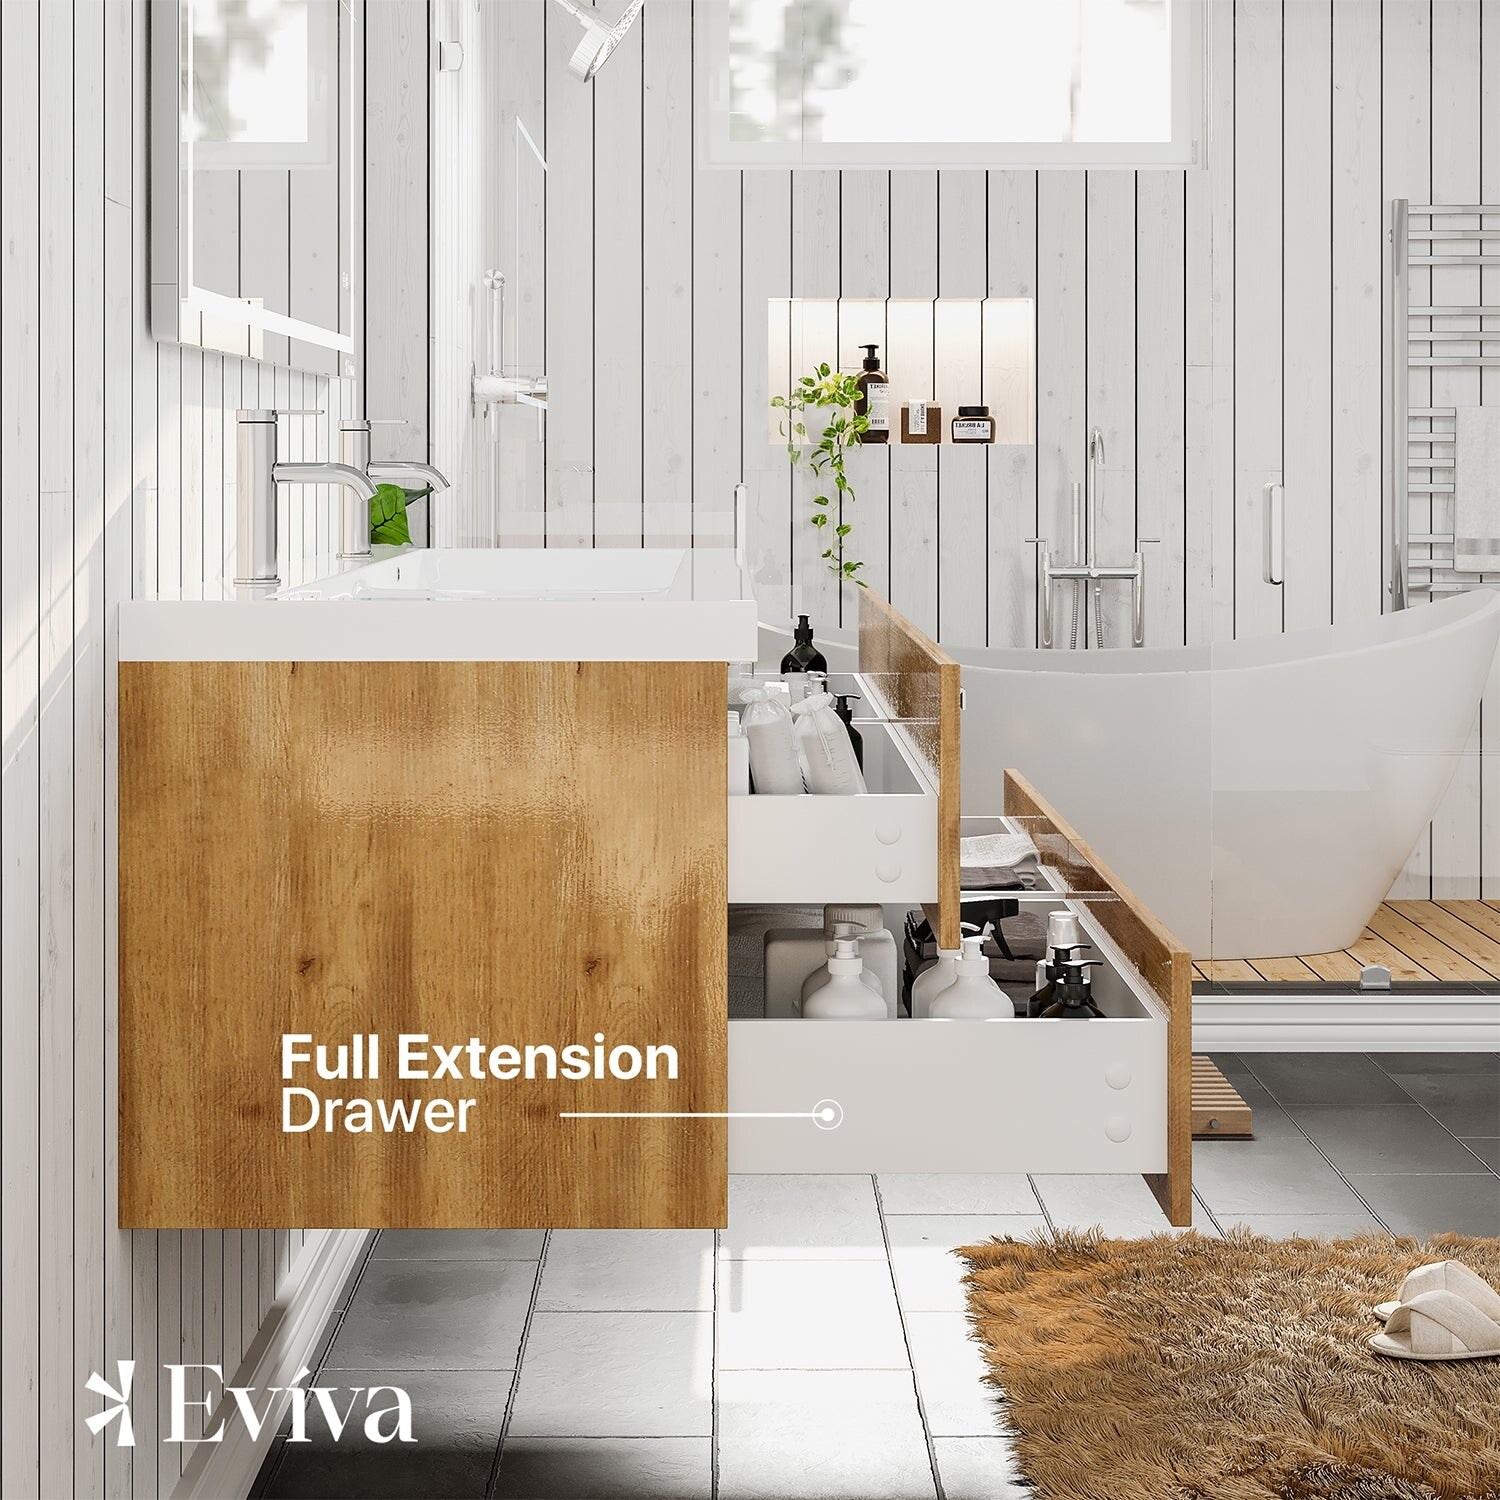 Eviva Surf 57 Black-Wood Modern Bathroom Vanity Set with Integrated White Acrylic Double Sink